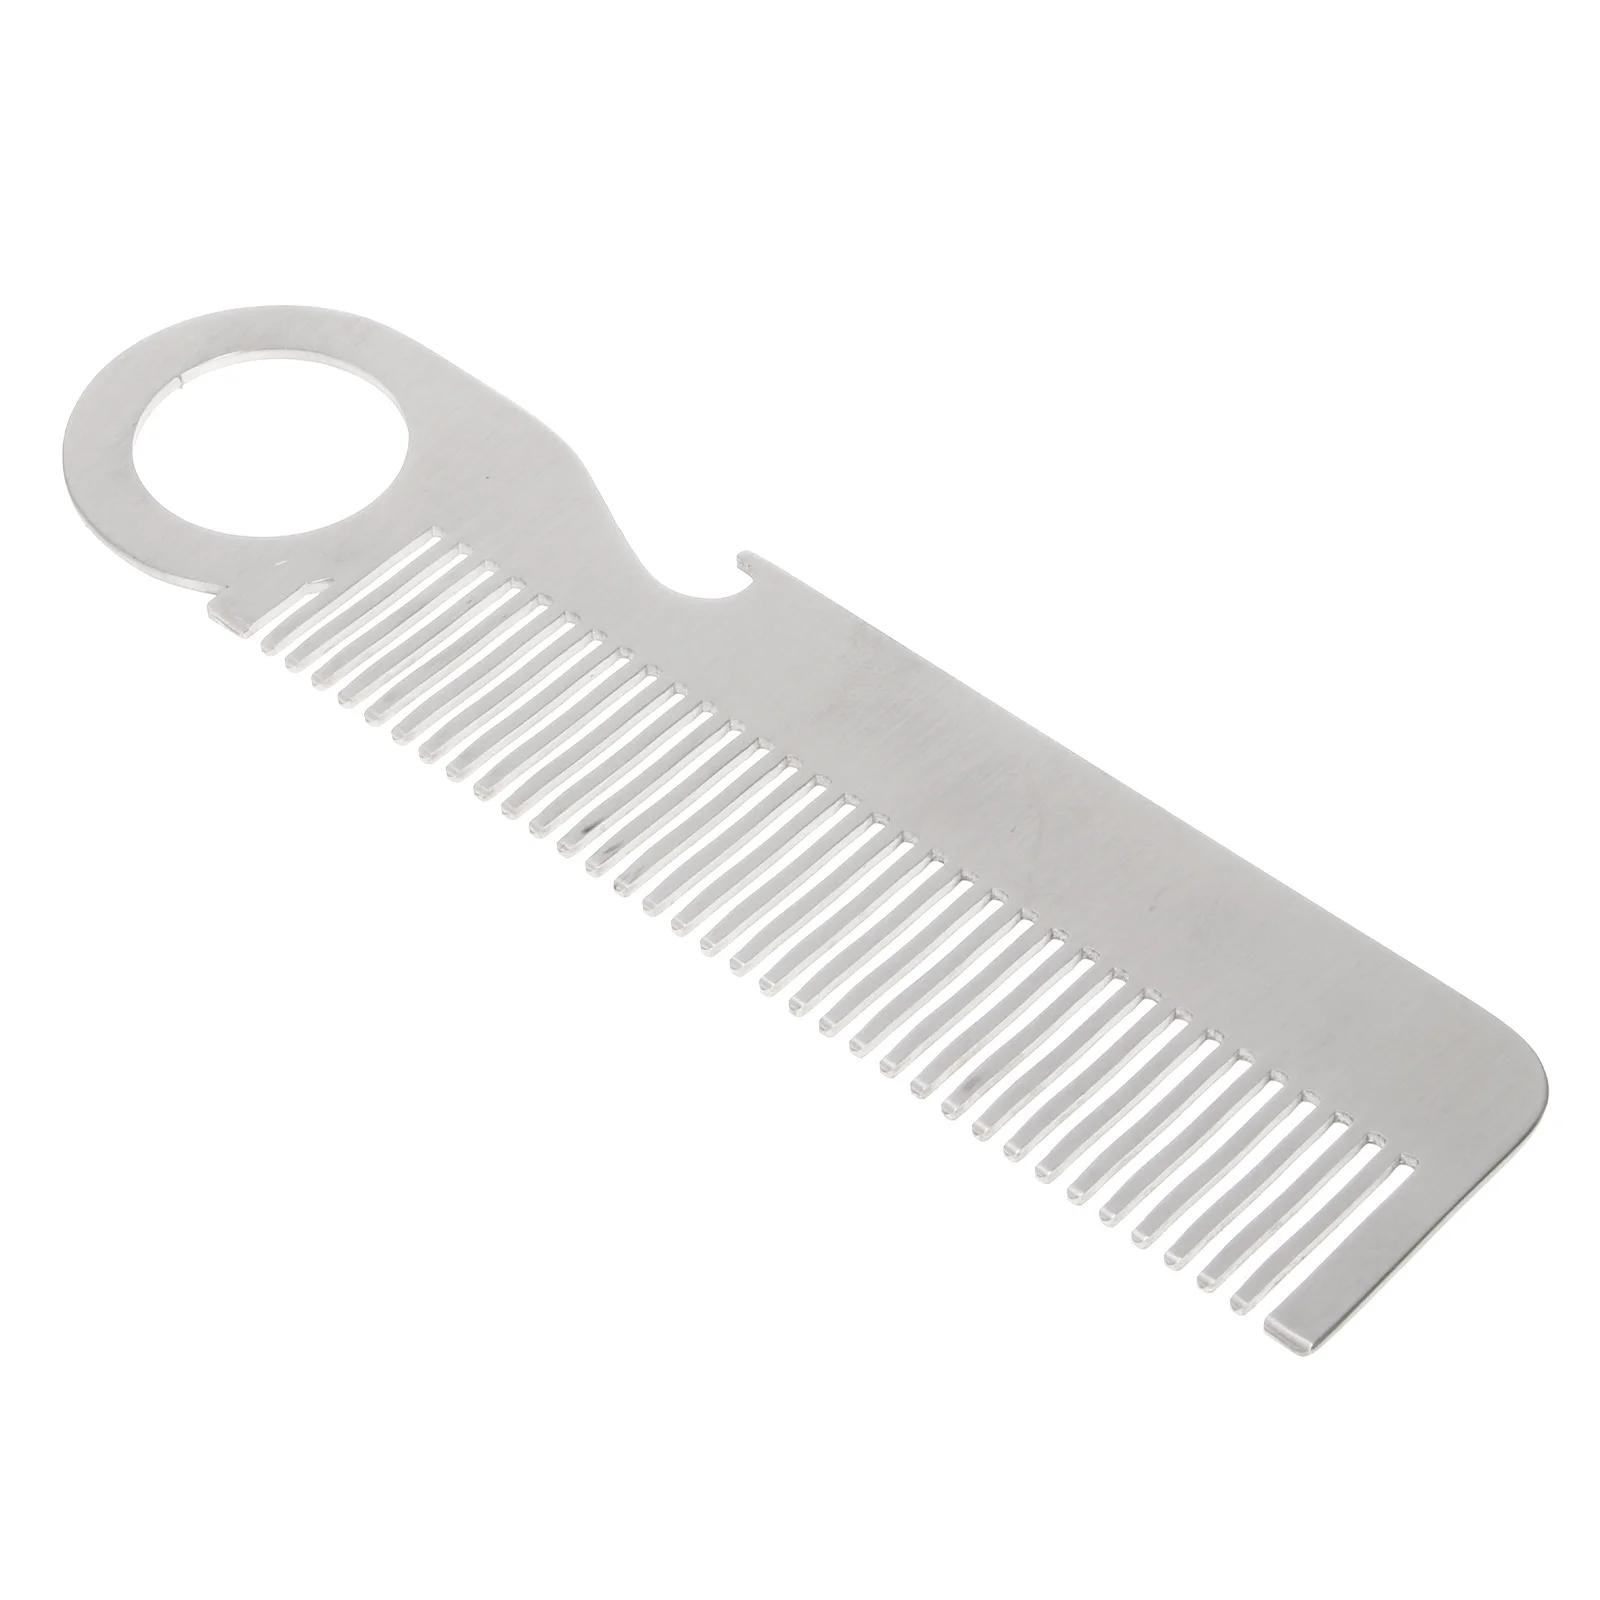 

Comb Beard Hair Mustache Men Styling Brush Pocket Cutting Metal Barbershop Male Grooming Fine Steel Static Anti Stainless